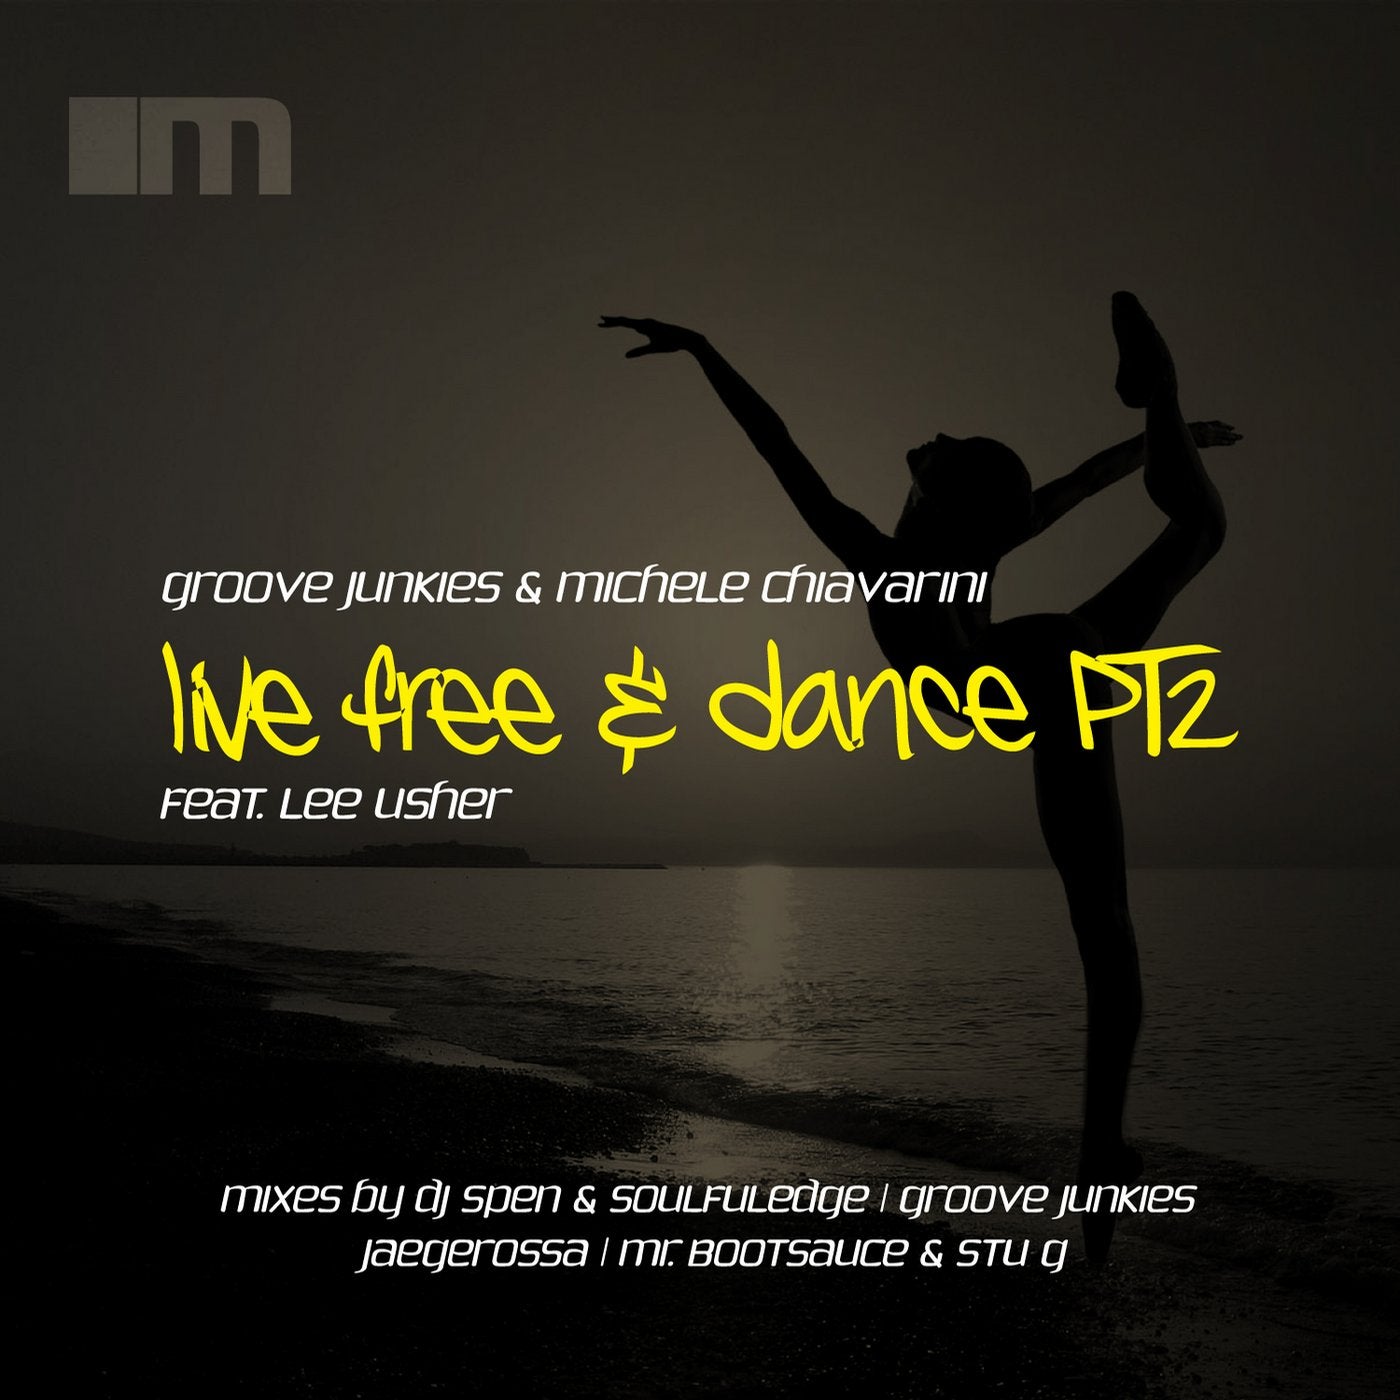 Live Free & Dance, Pt. 2